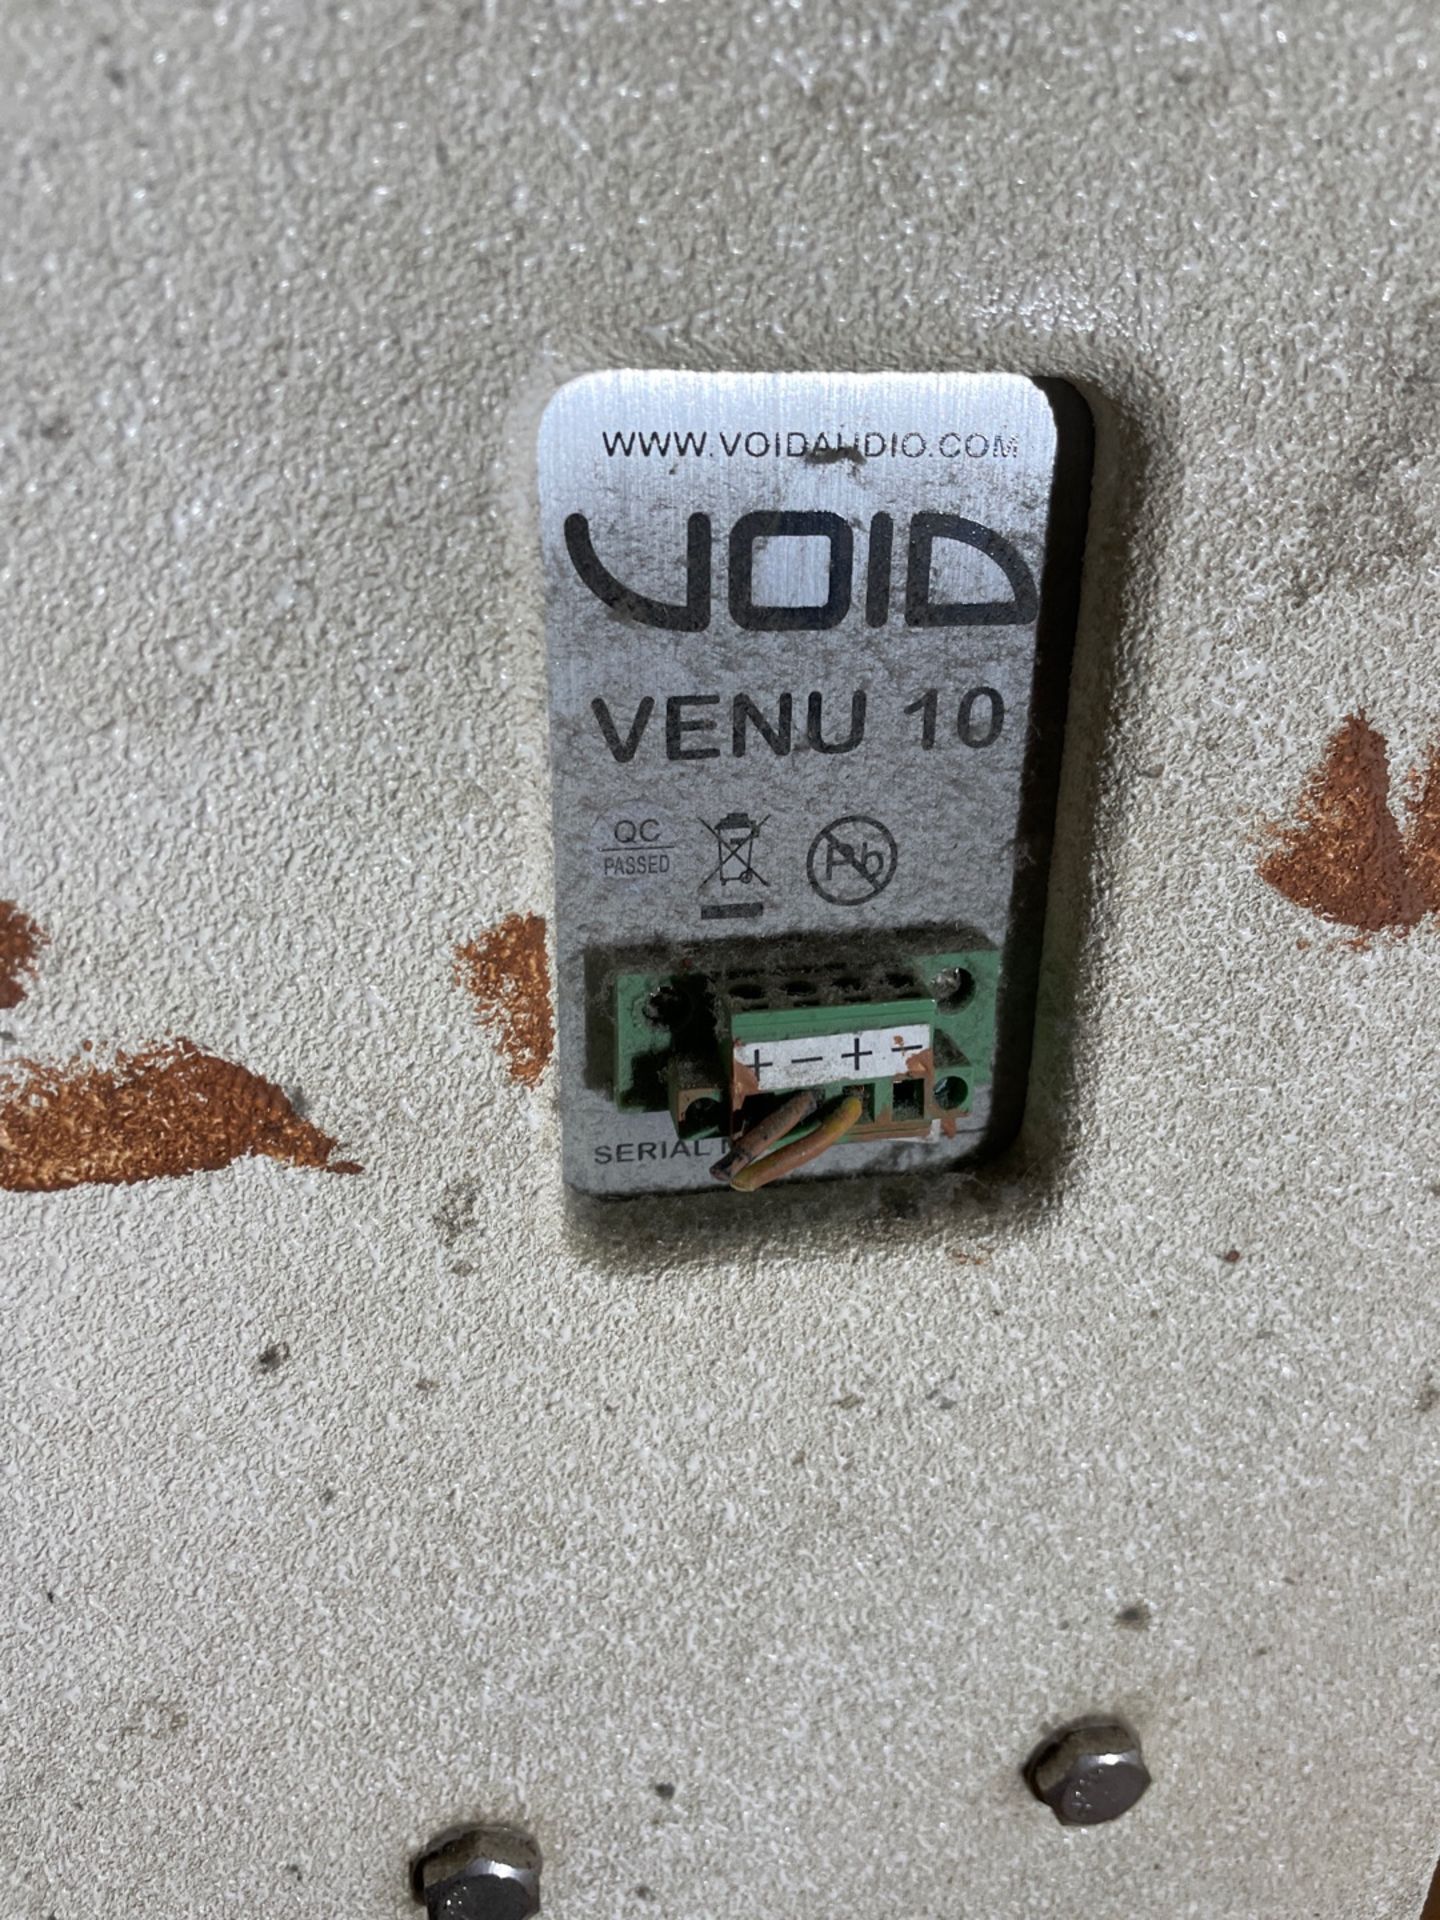 Void Venu 10 Speakers x 2 - Image 2 of 2